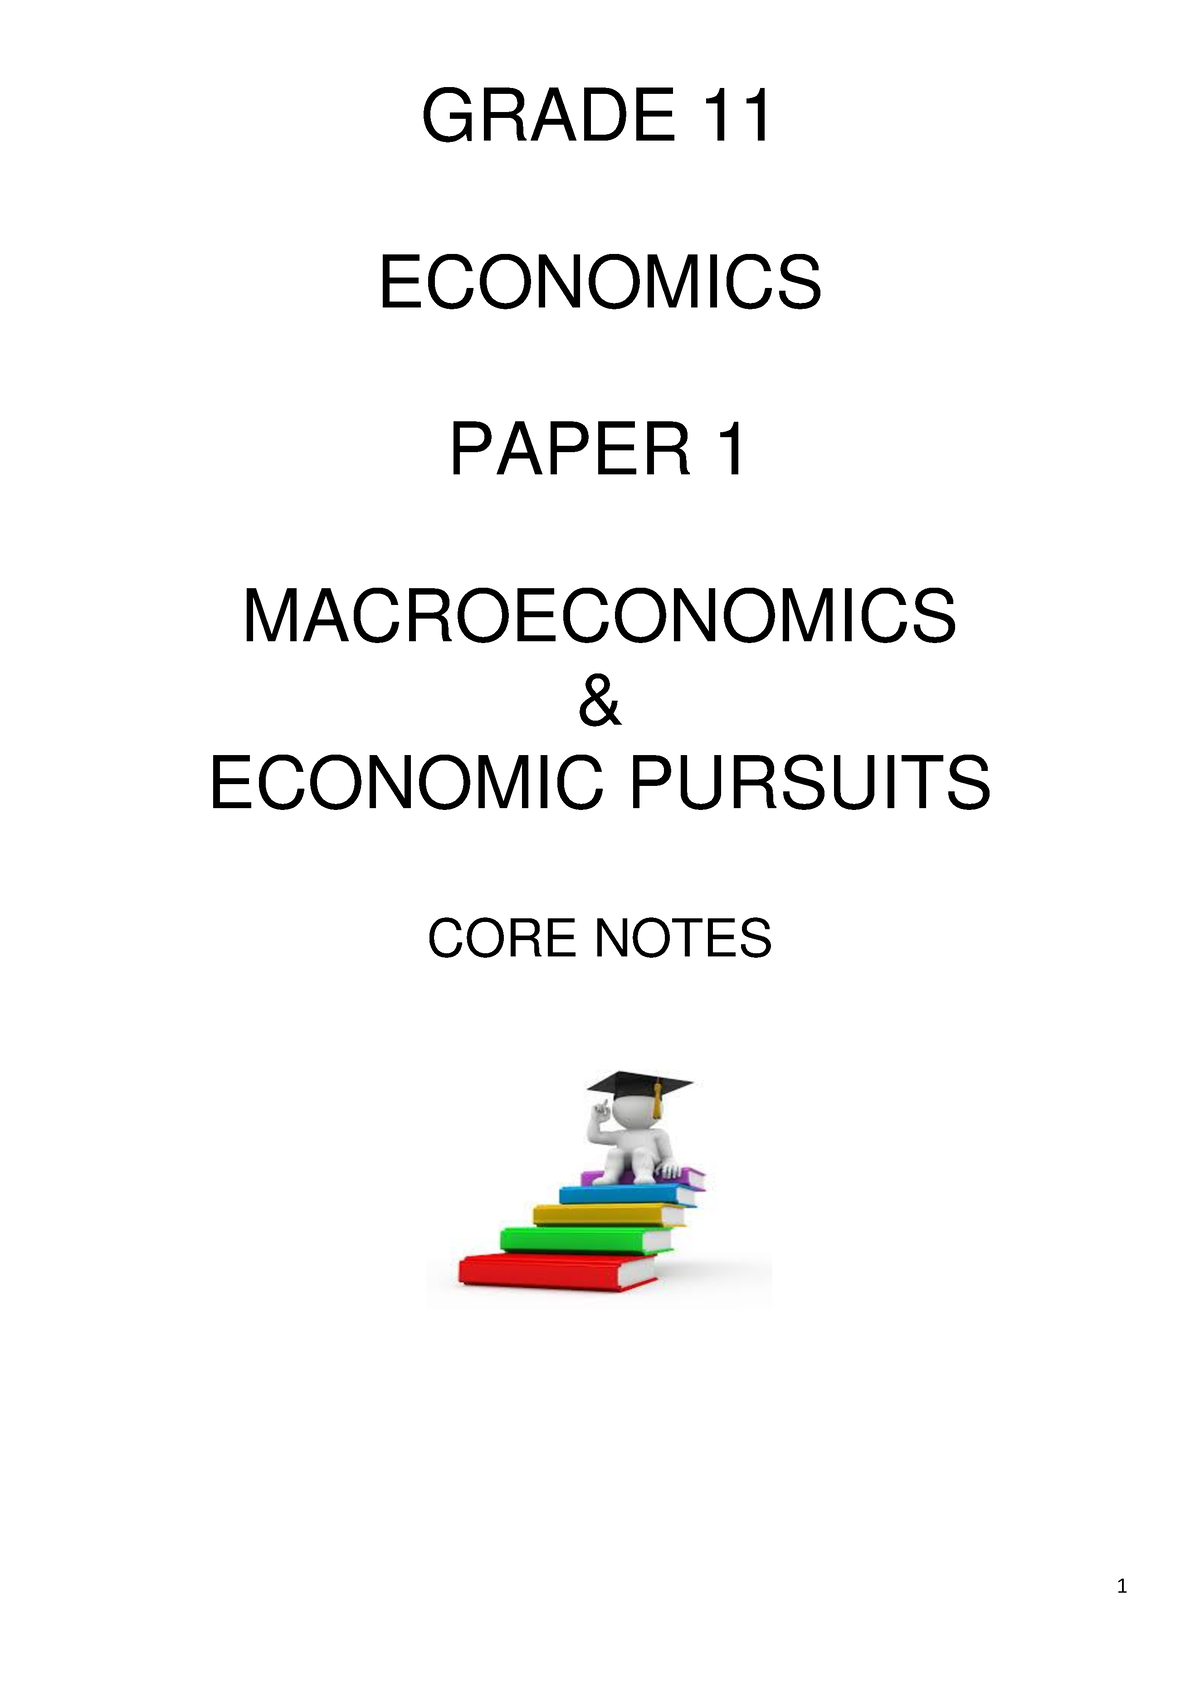 assignment economics grade 11